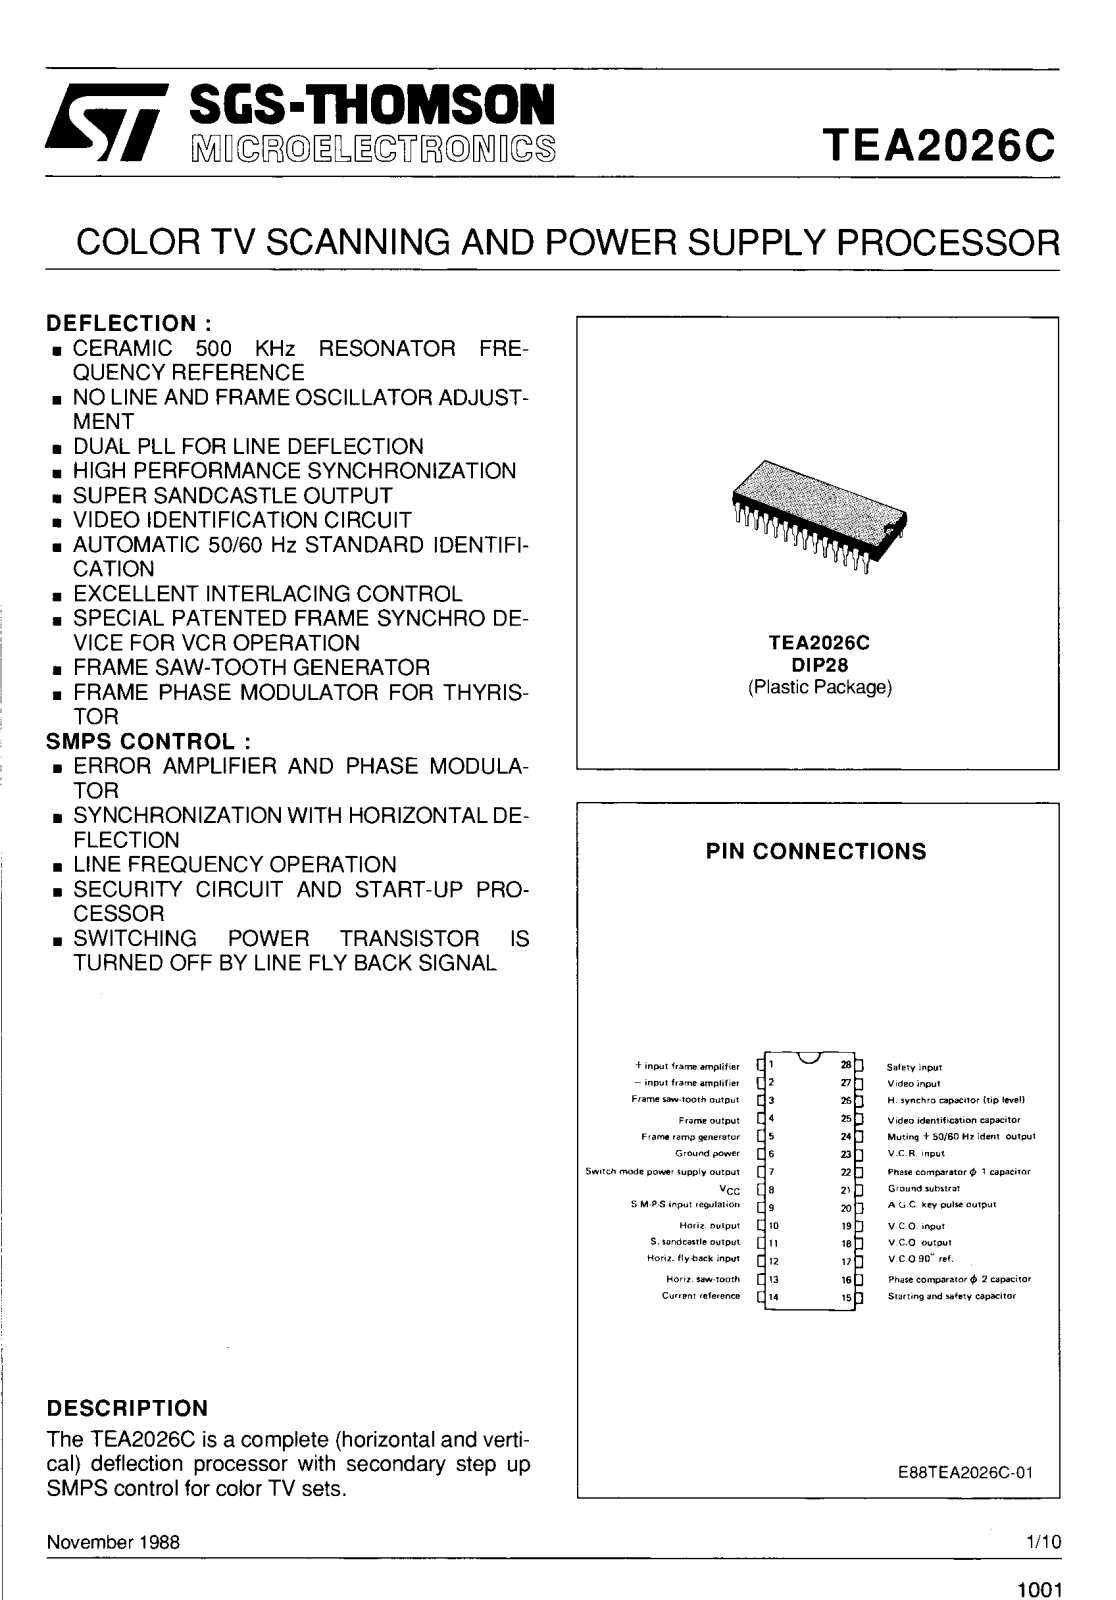 SGS Thomson Microelectronics TEA2026C Datasheet